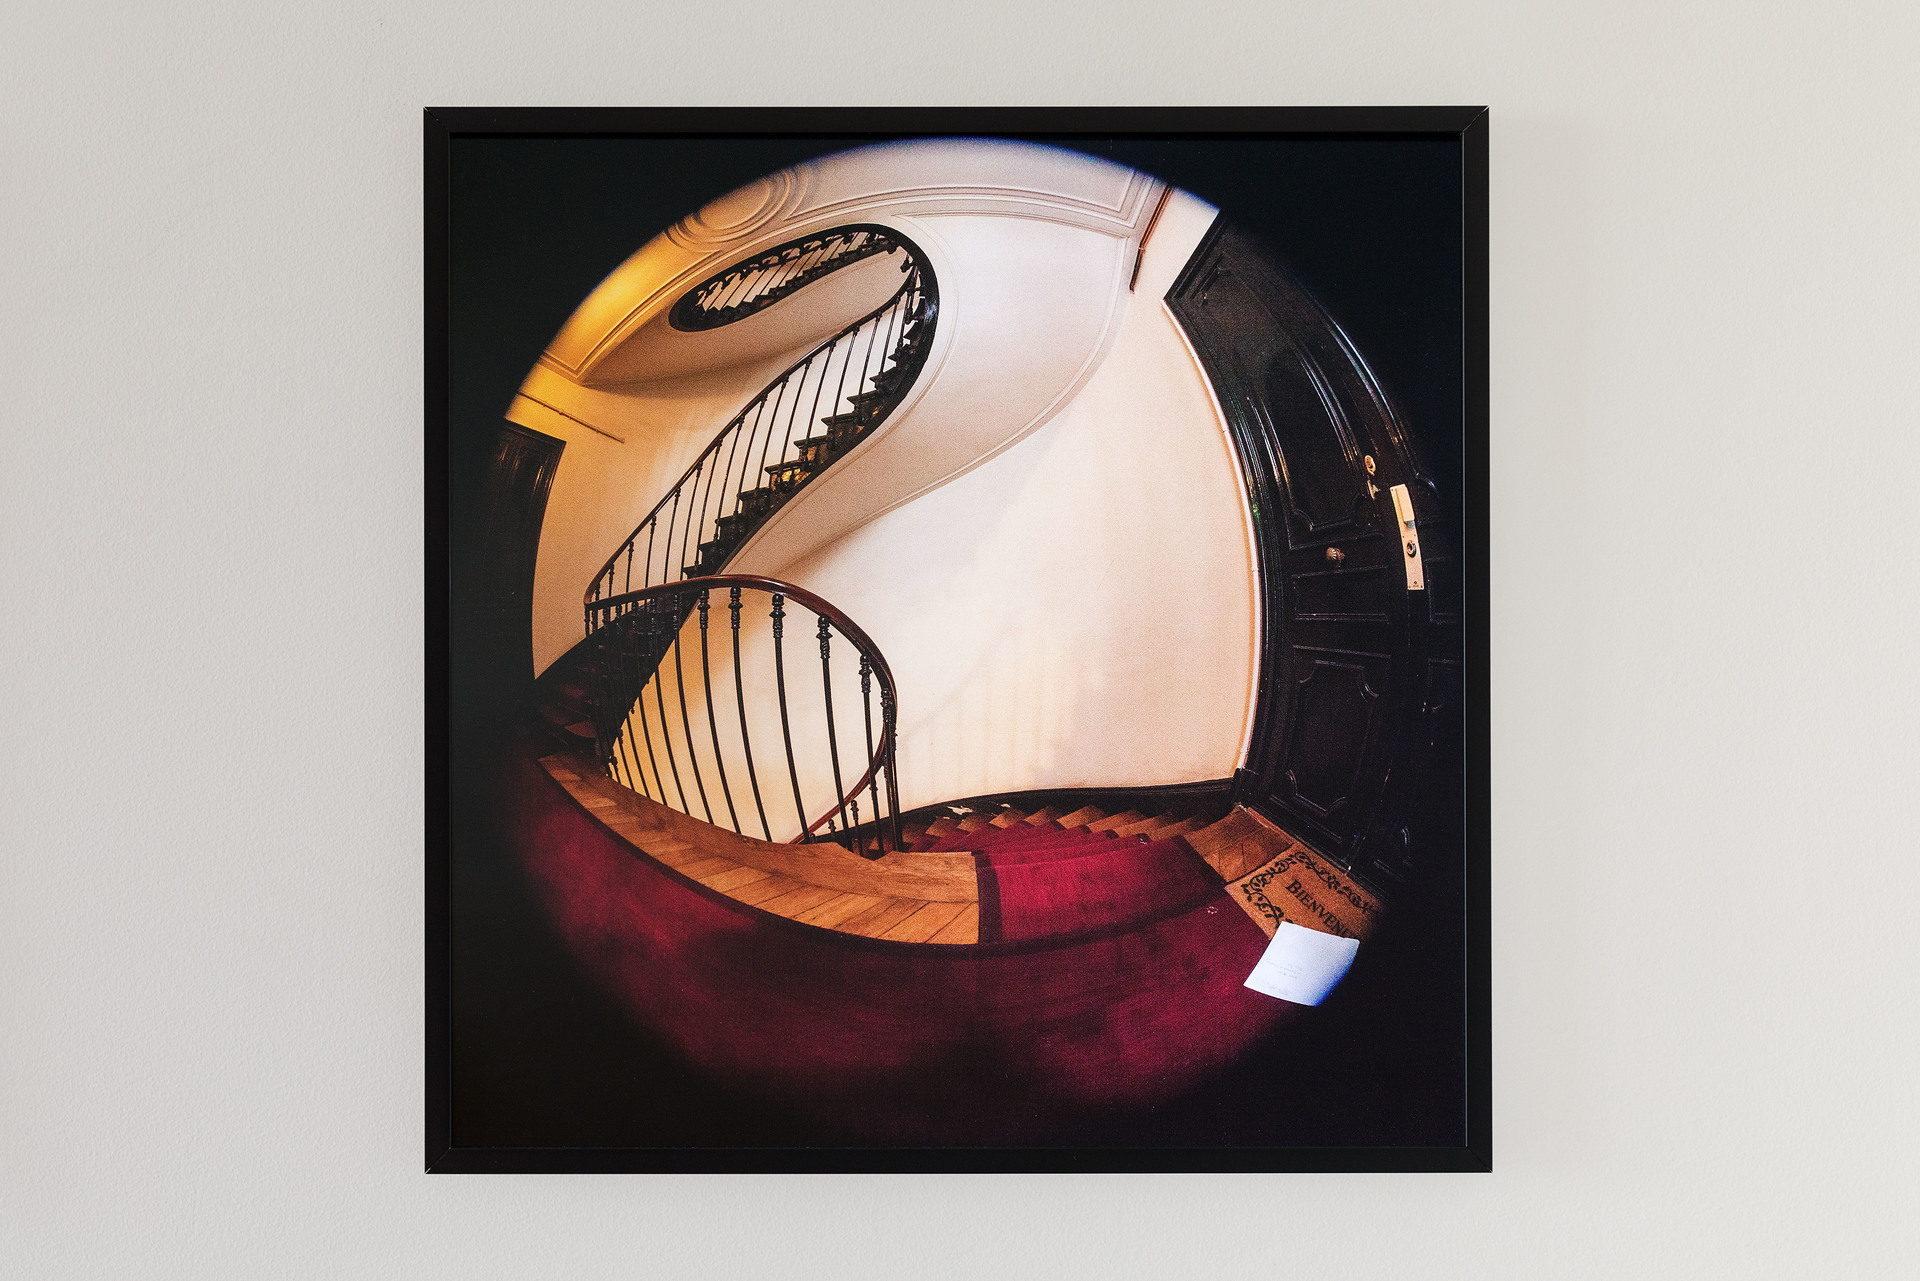 Emanuel Rossetti, “Stairs”, 2018
Digitaler C-Print, 40x40cm, gerahmt
Photo Credit: Romain Darnaud
Courtesy: Jan Kaps, Köln & Karma International, Zürich